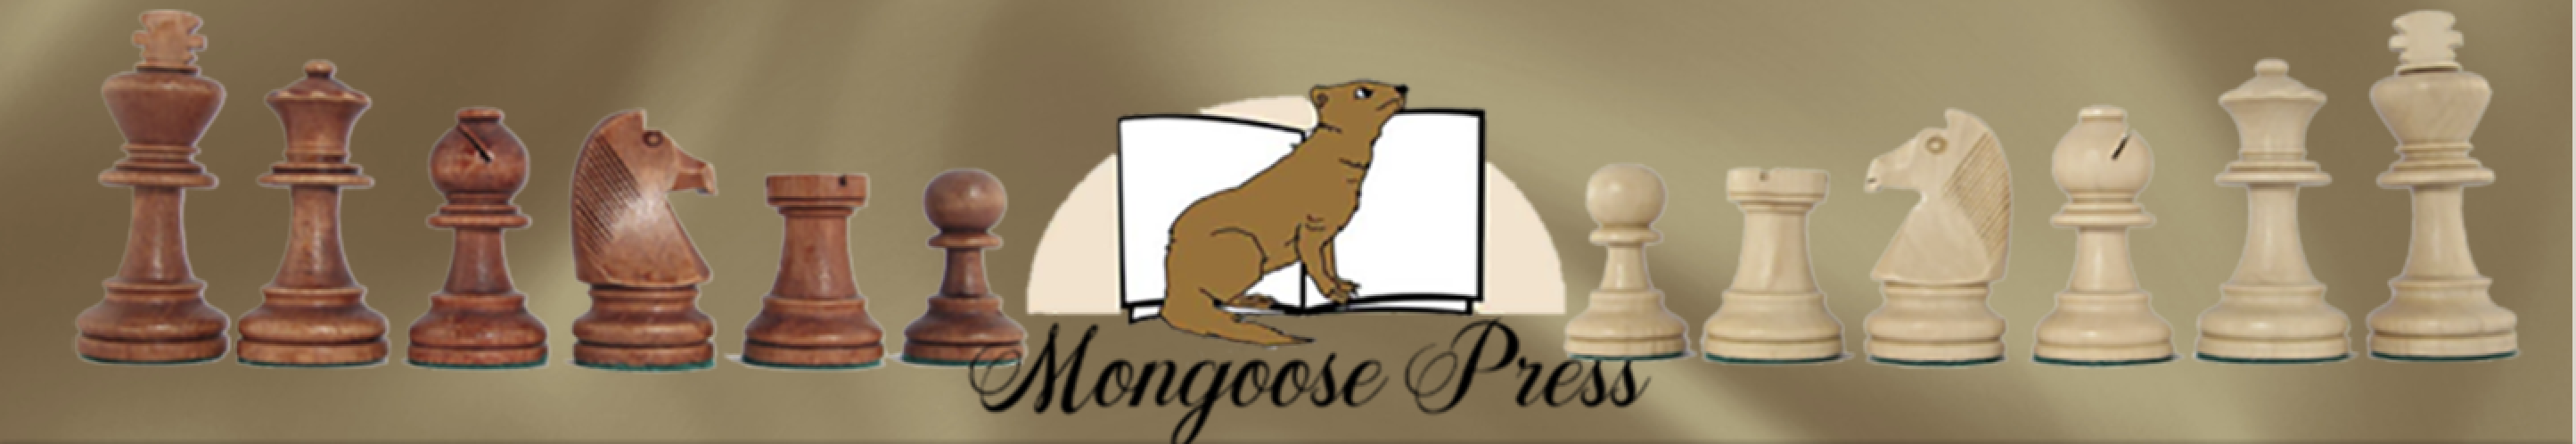 Mongoose Press